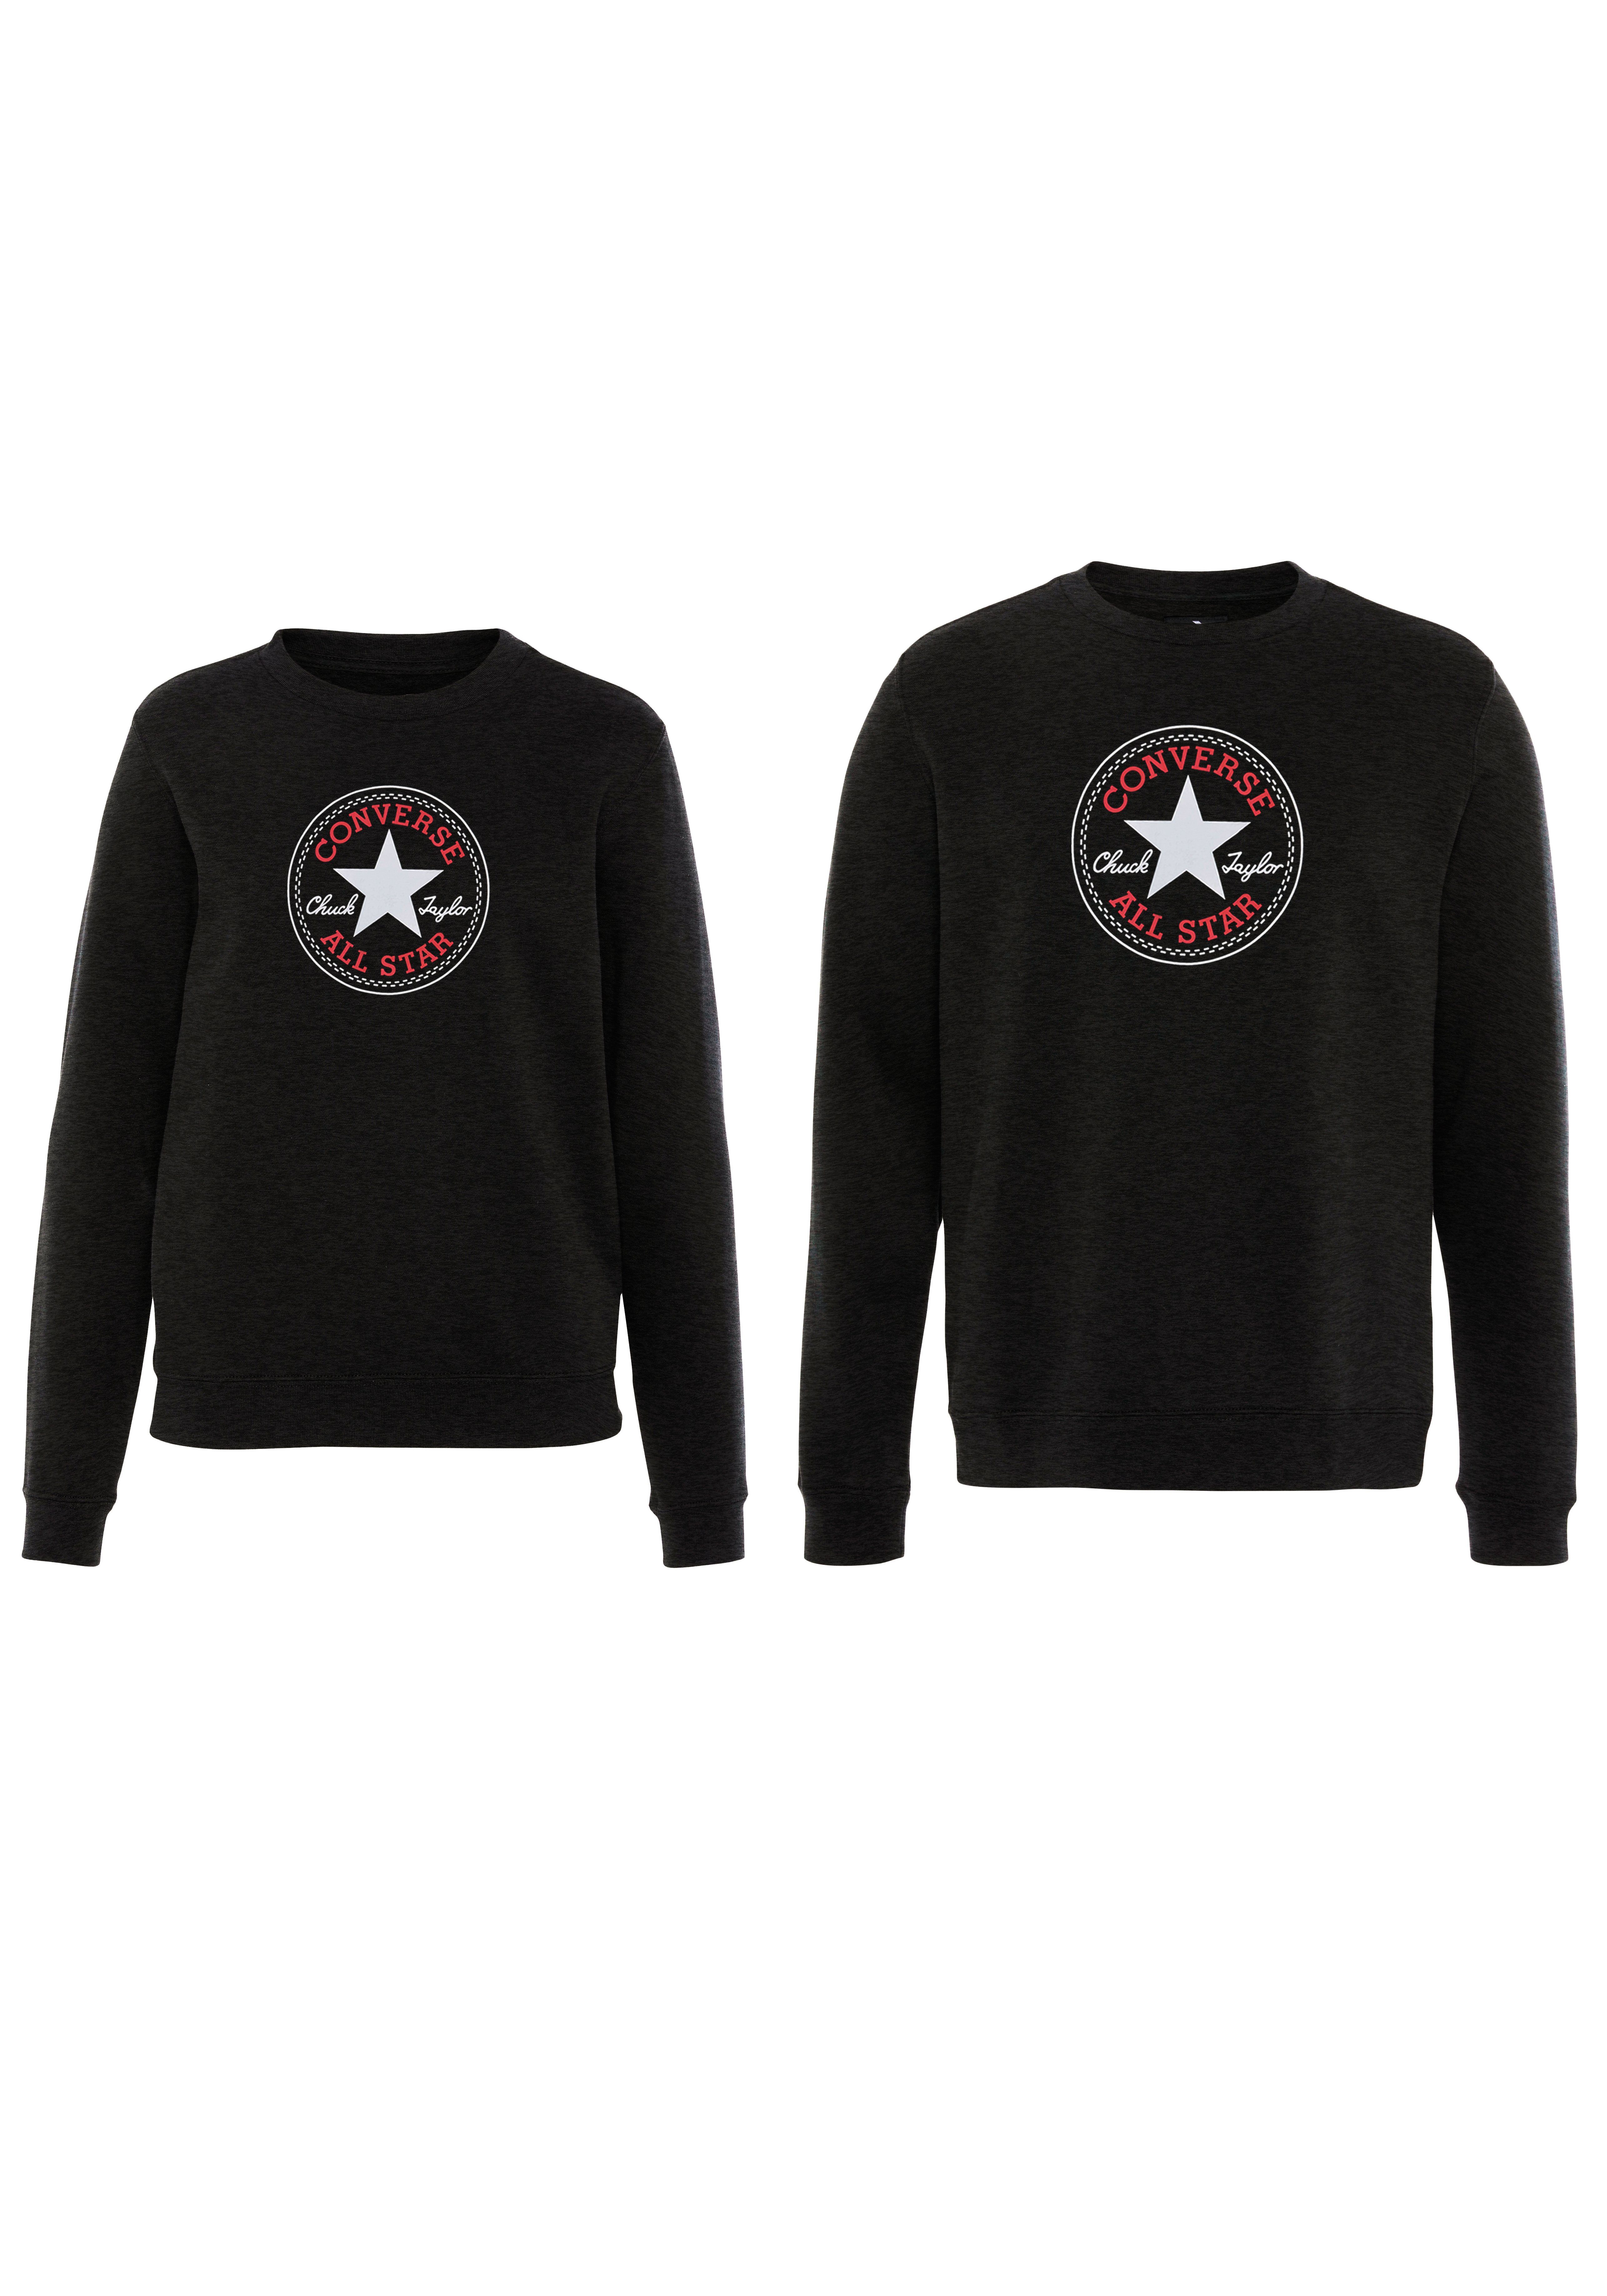 UNISEX Sweatshirt BRUSHED STAR BACK black1 PATCH Converse ALL